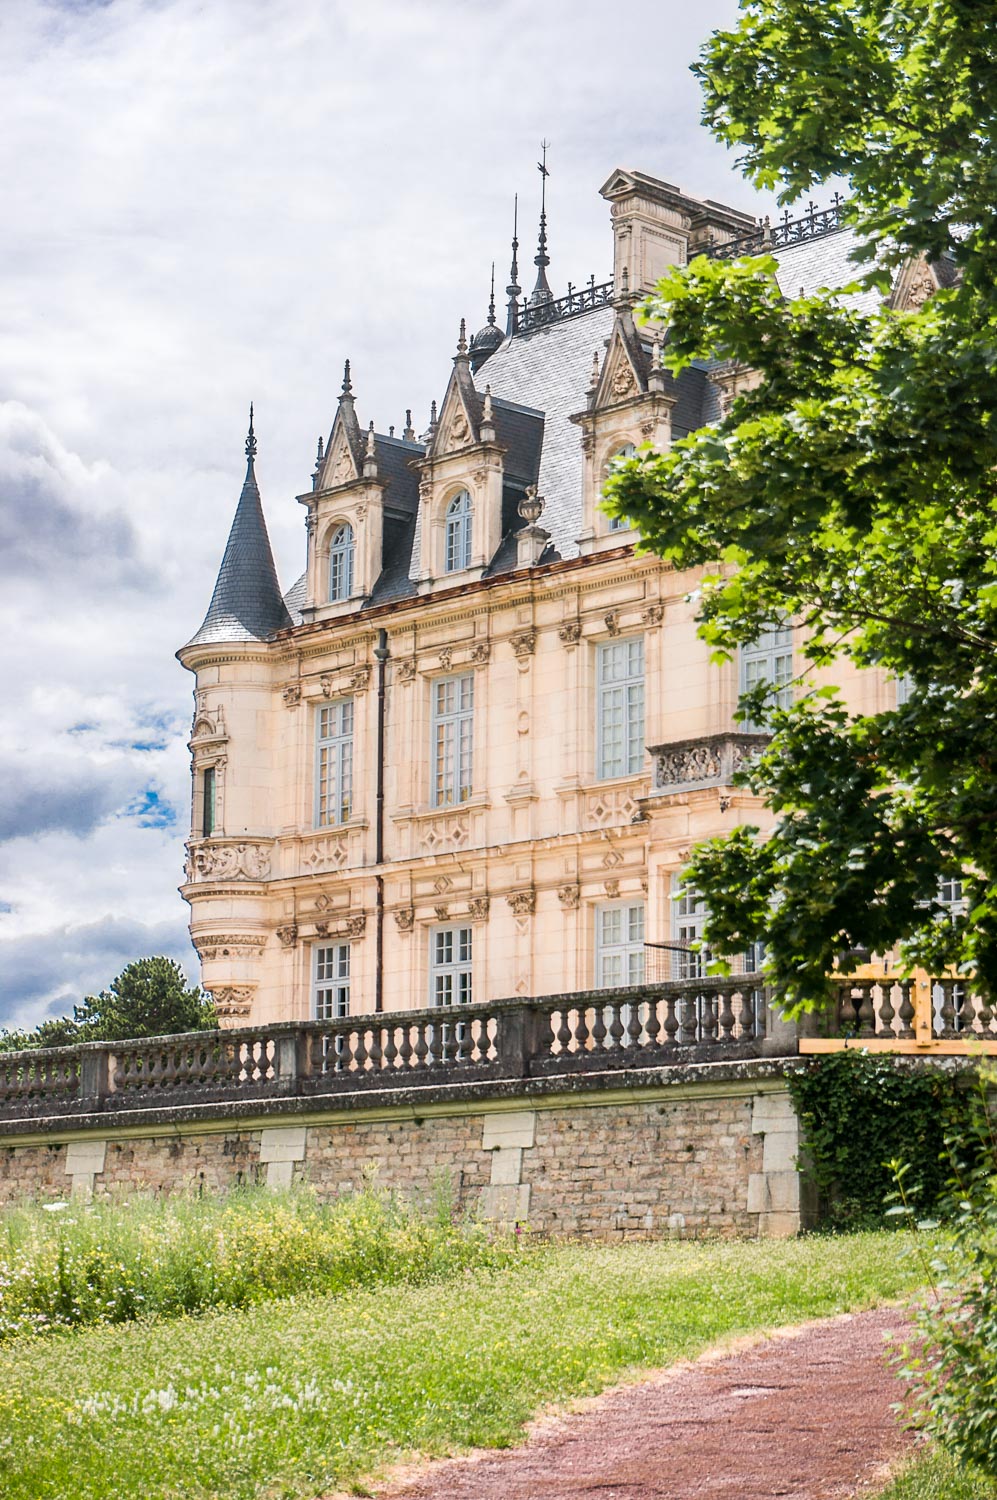 A month in France – Brochon and Chateau de Clos Vougeot